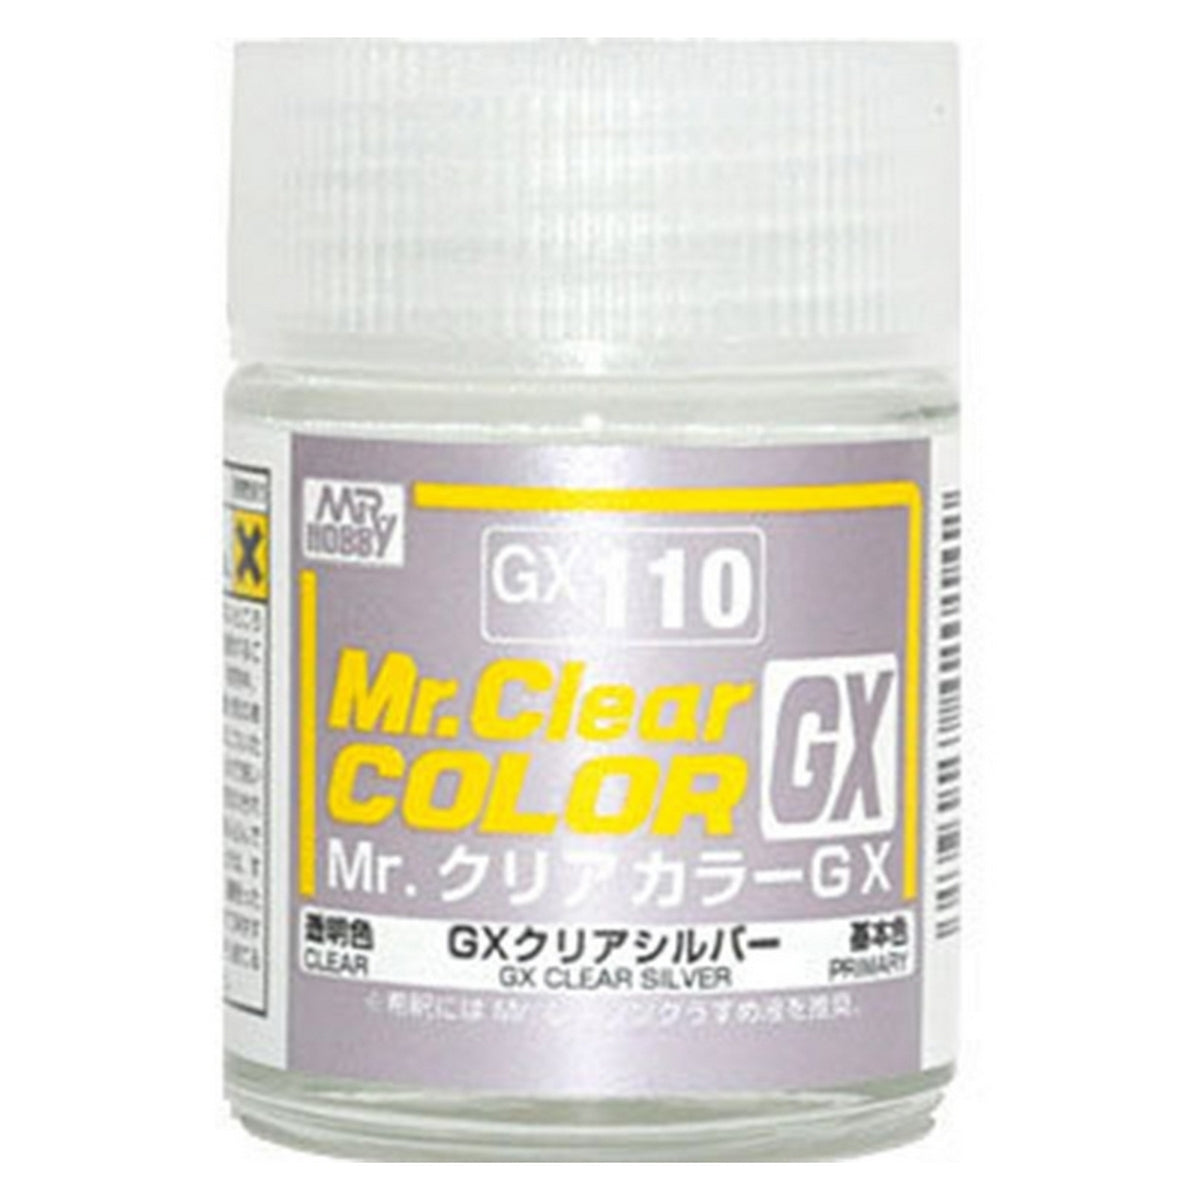 Mr. Hobby C90 Metallic Shine Silver 10ml, GSI Mr. Color